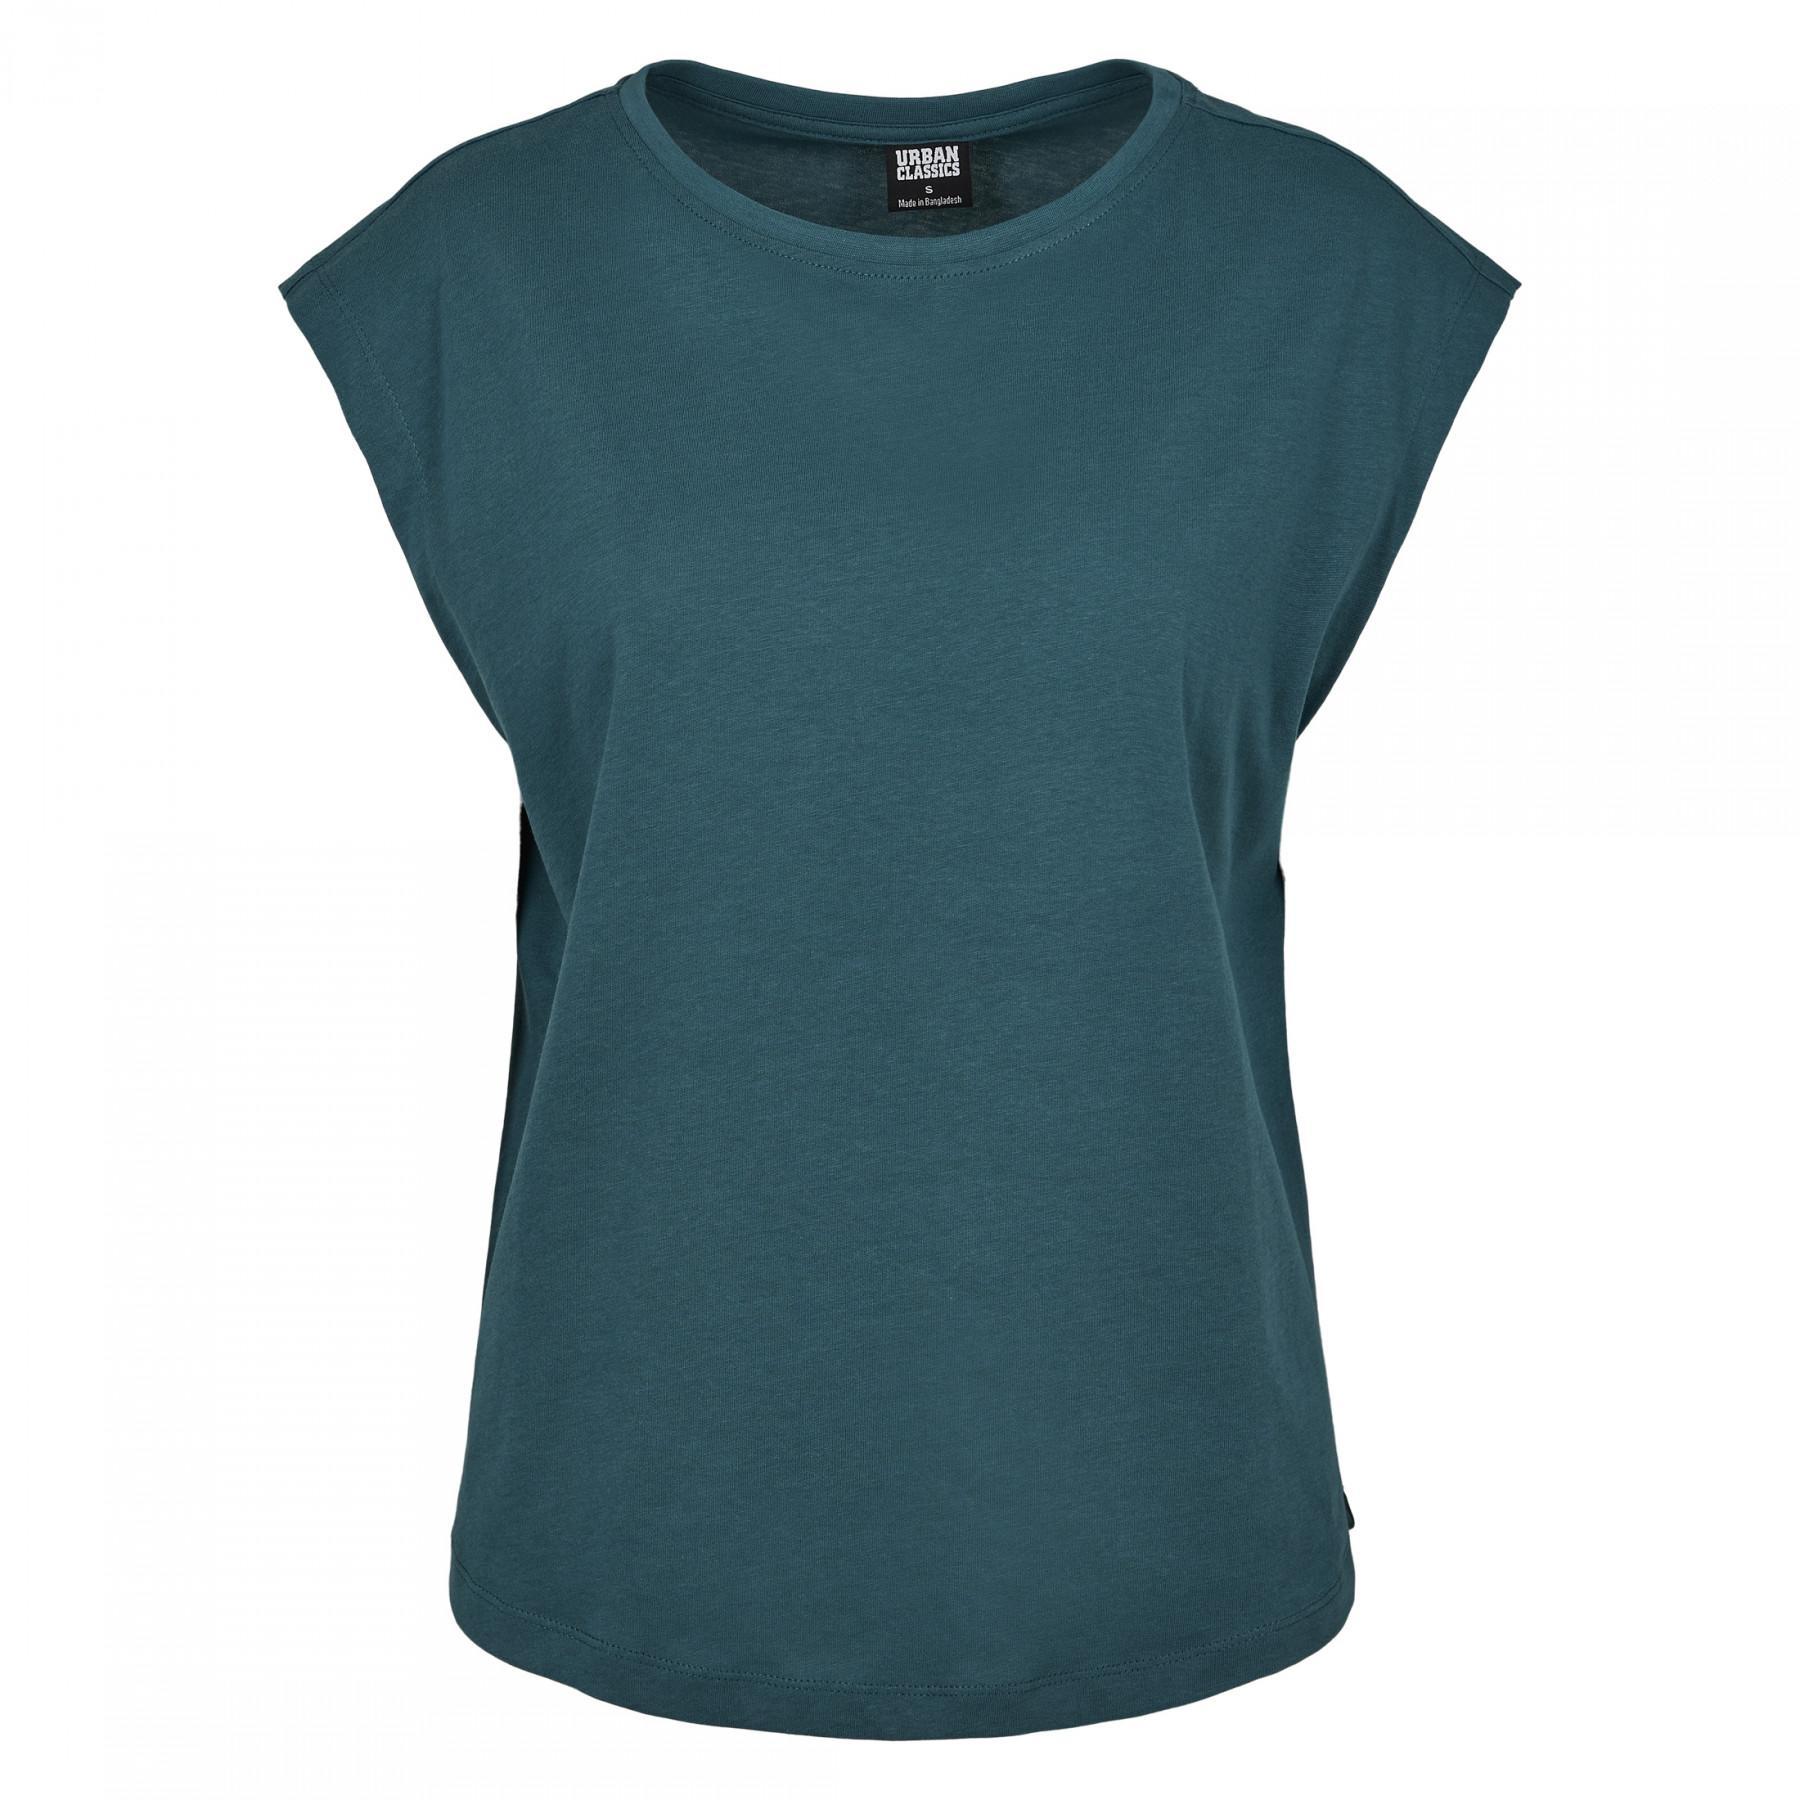 T-shirt woman Urban Classic basic shaped